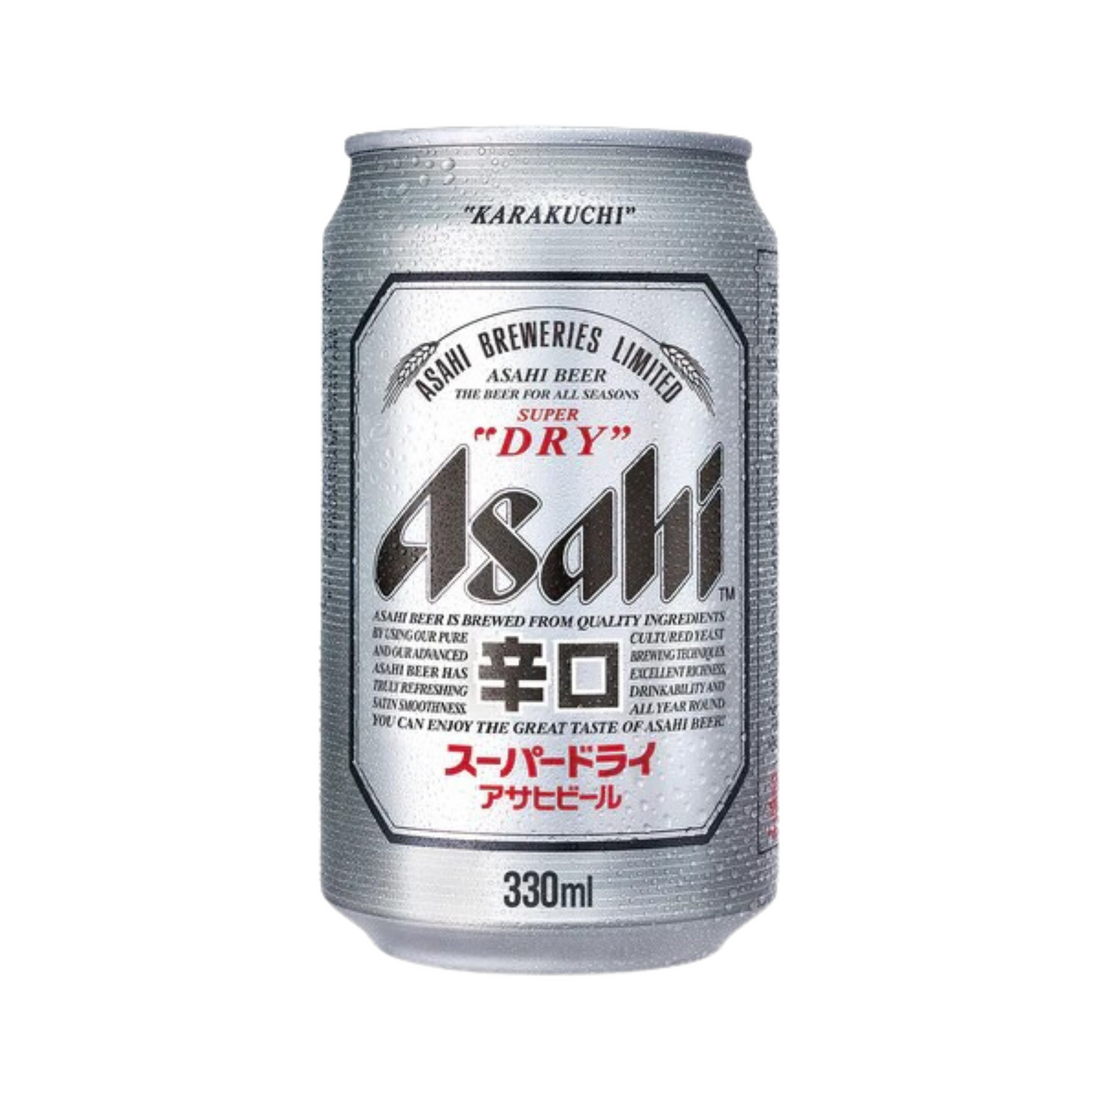 Asahi Super Dry, 330mL X 24 Cans